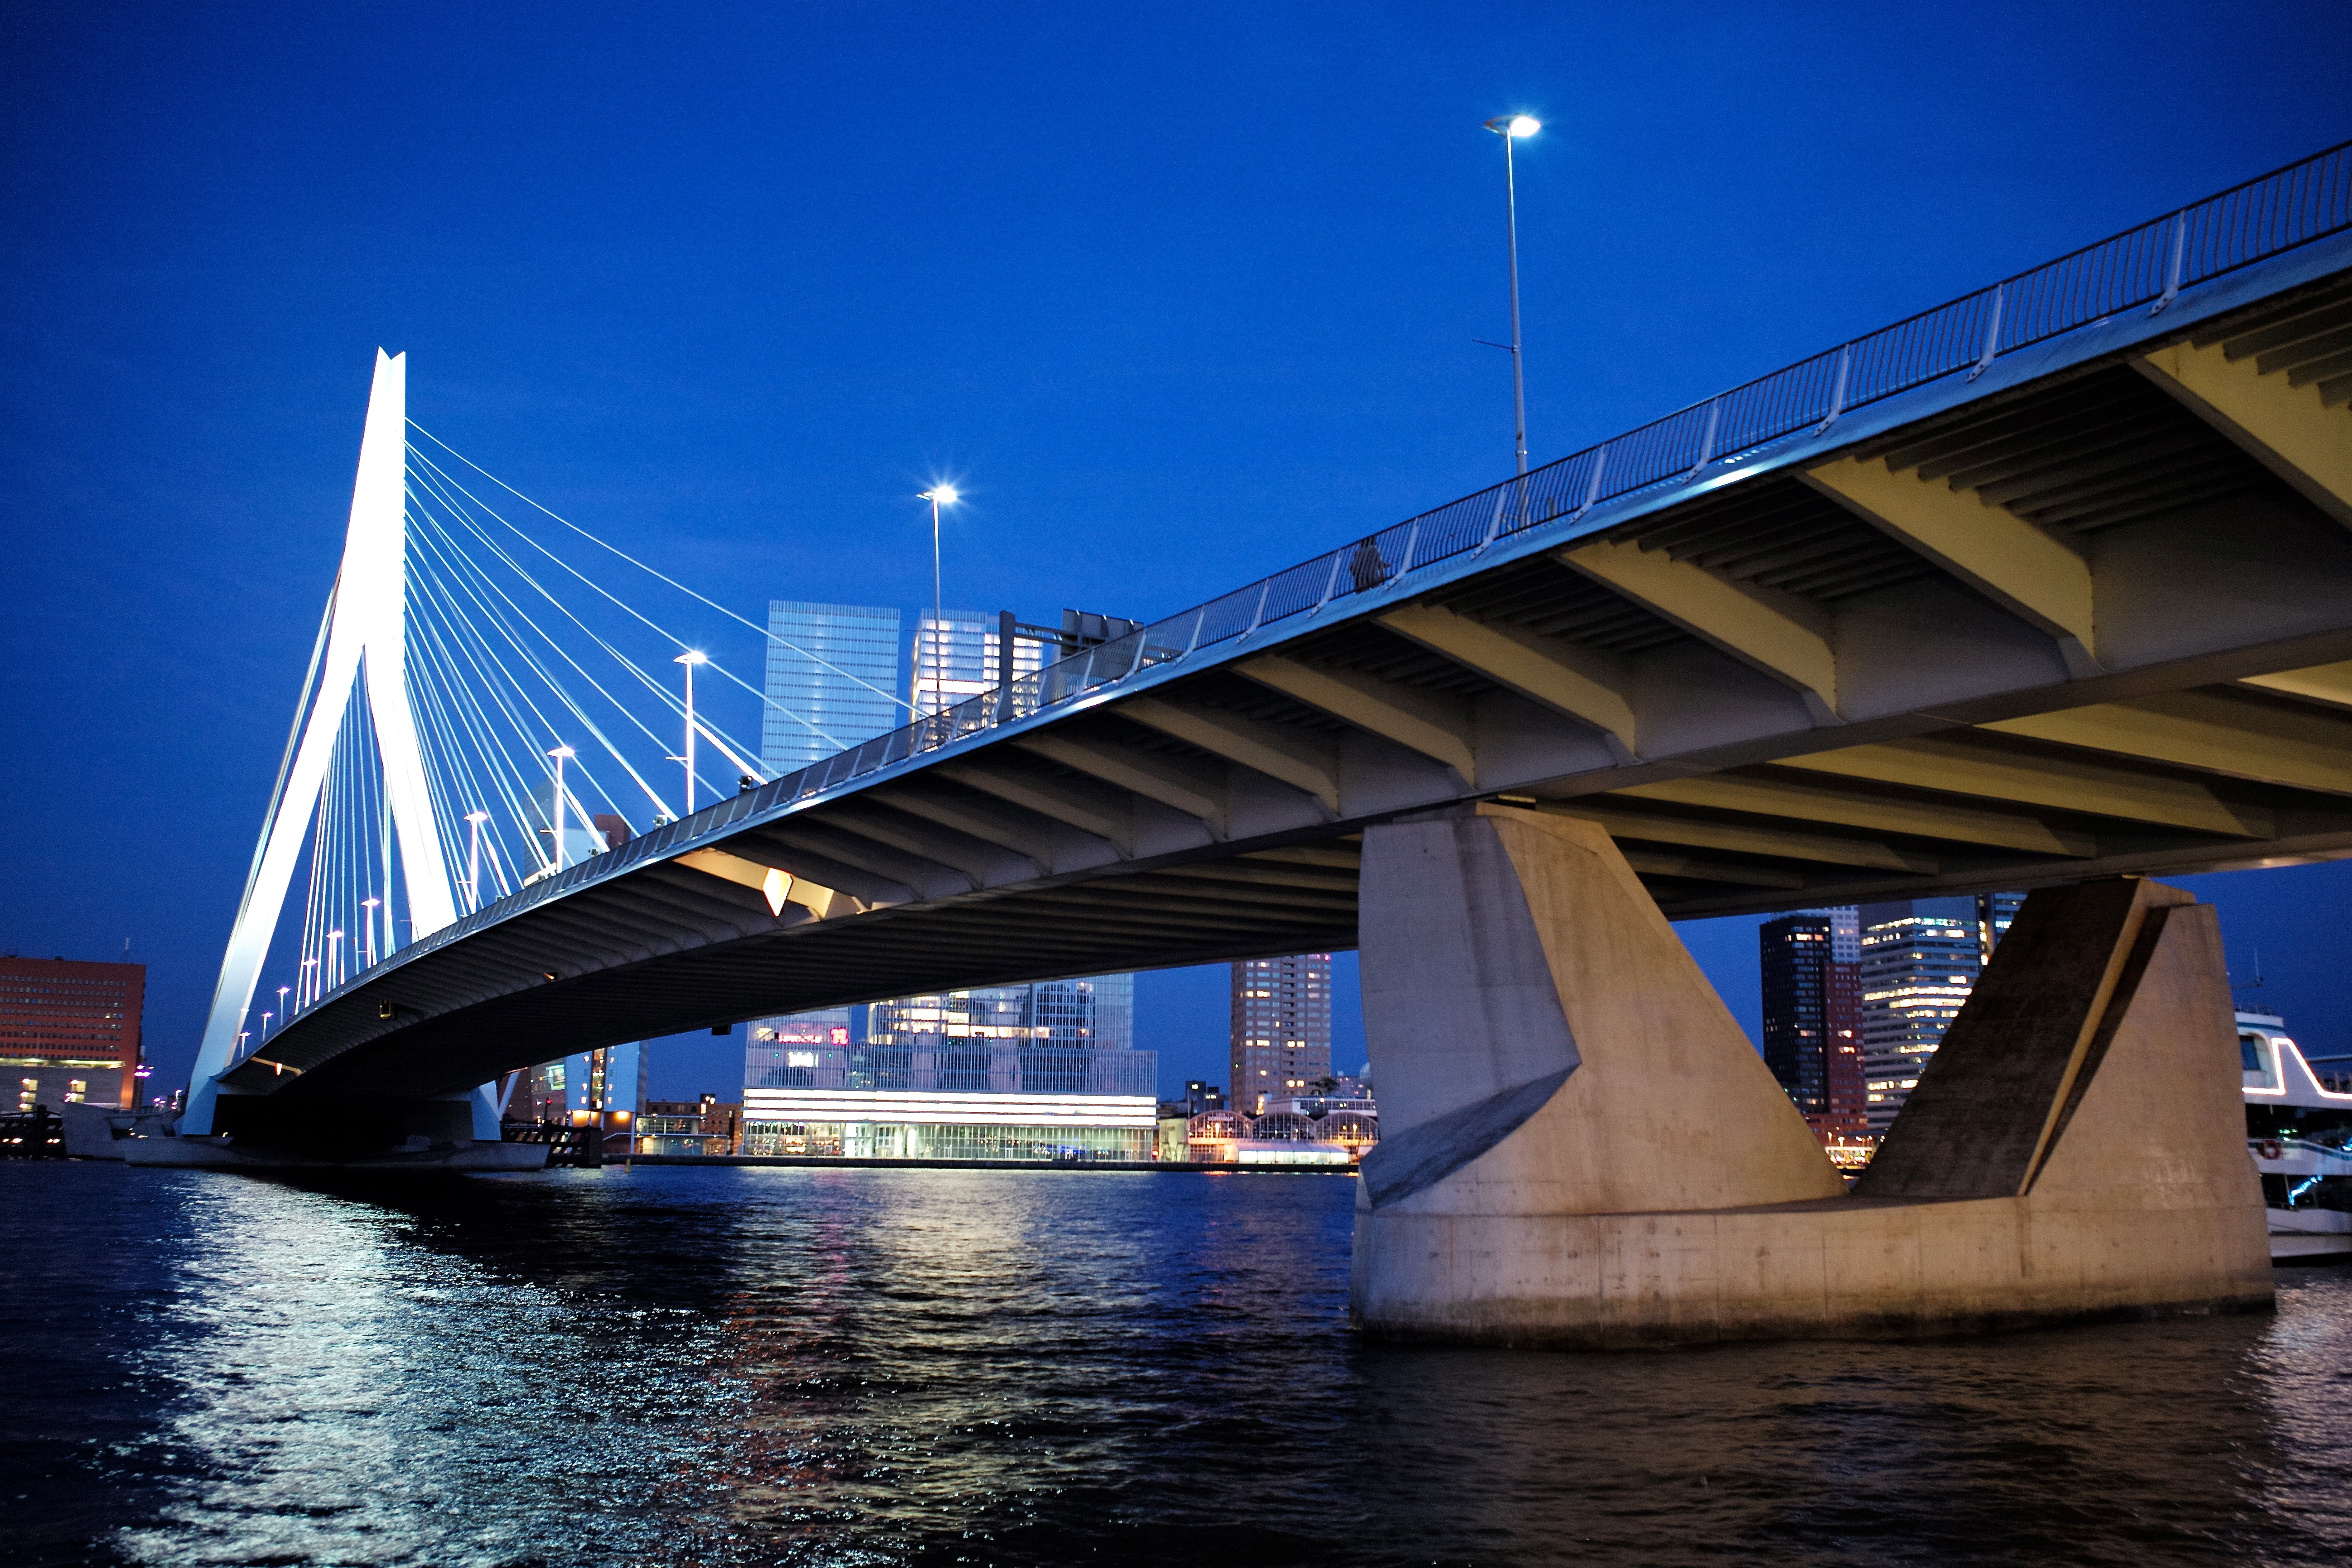 suspension bridge on body of water during nighttime